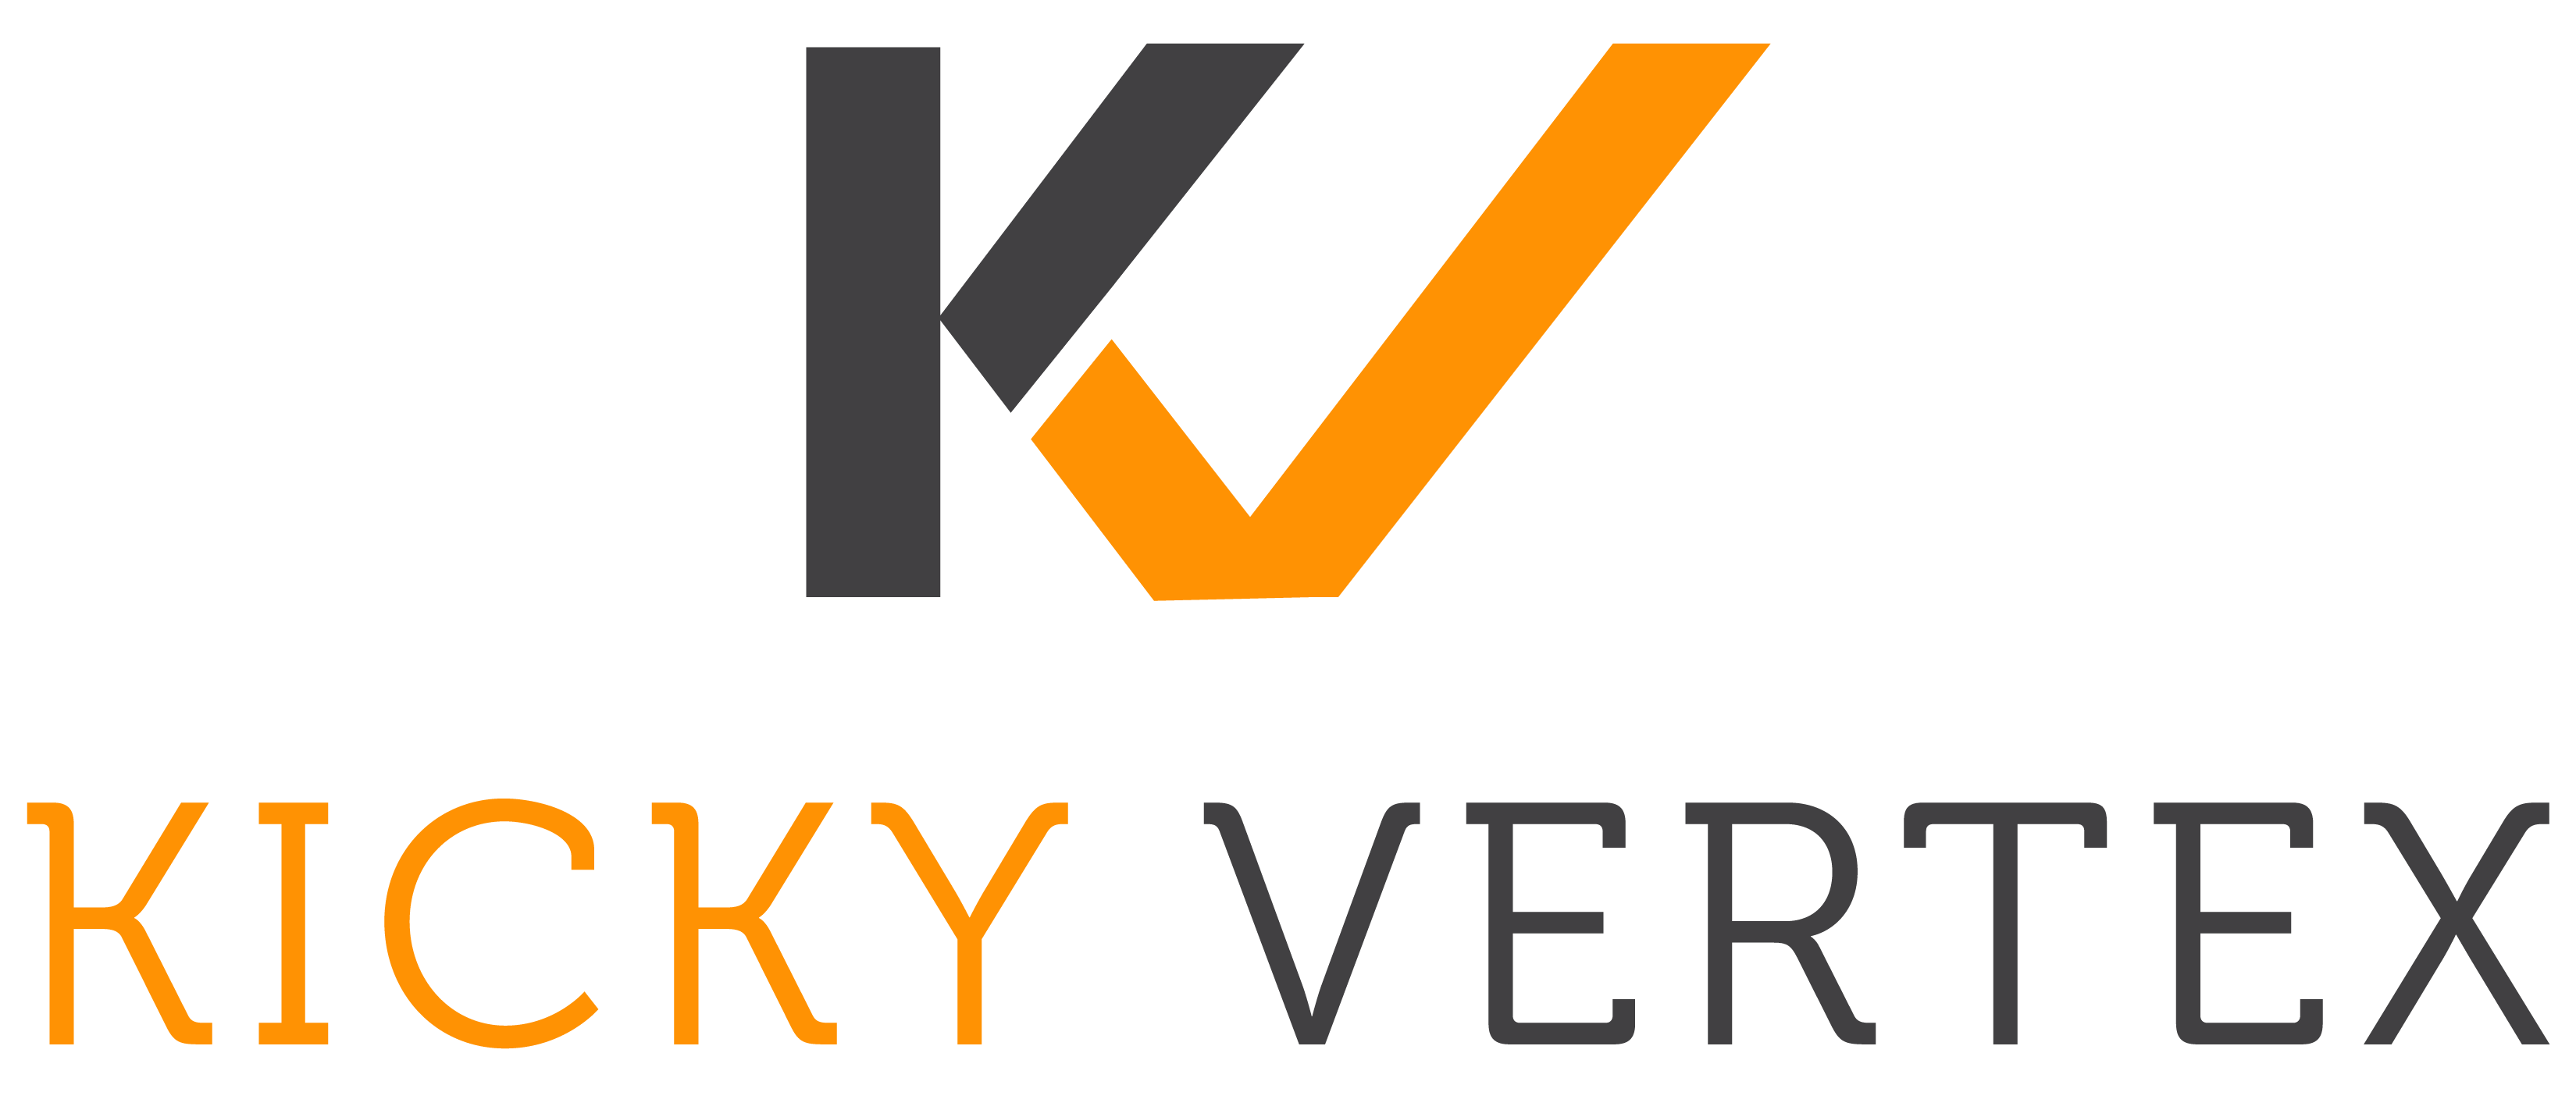 kickyvertex.com